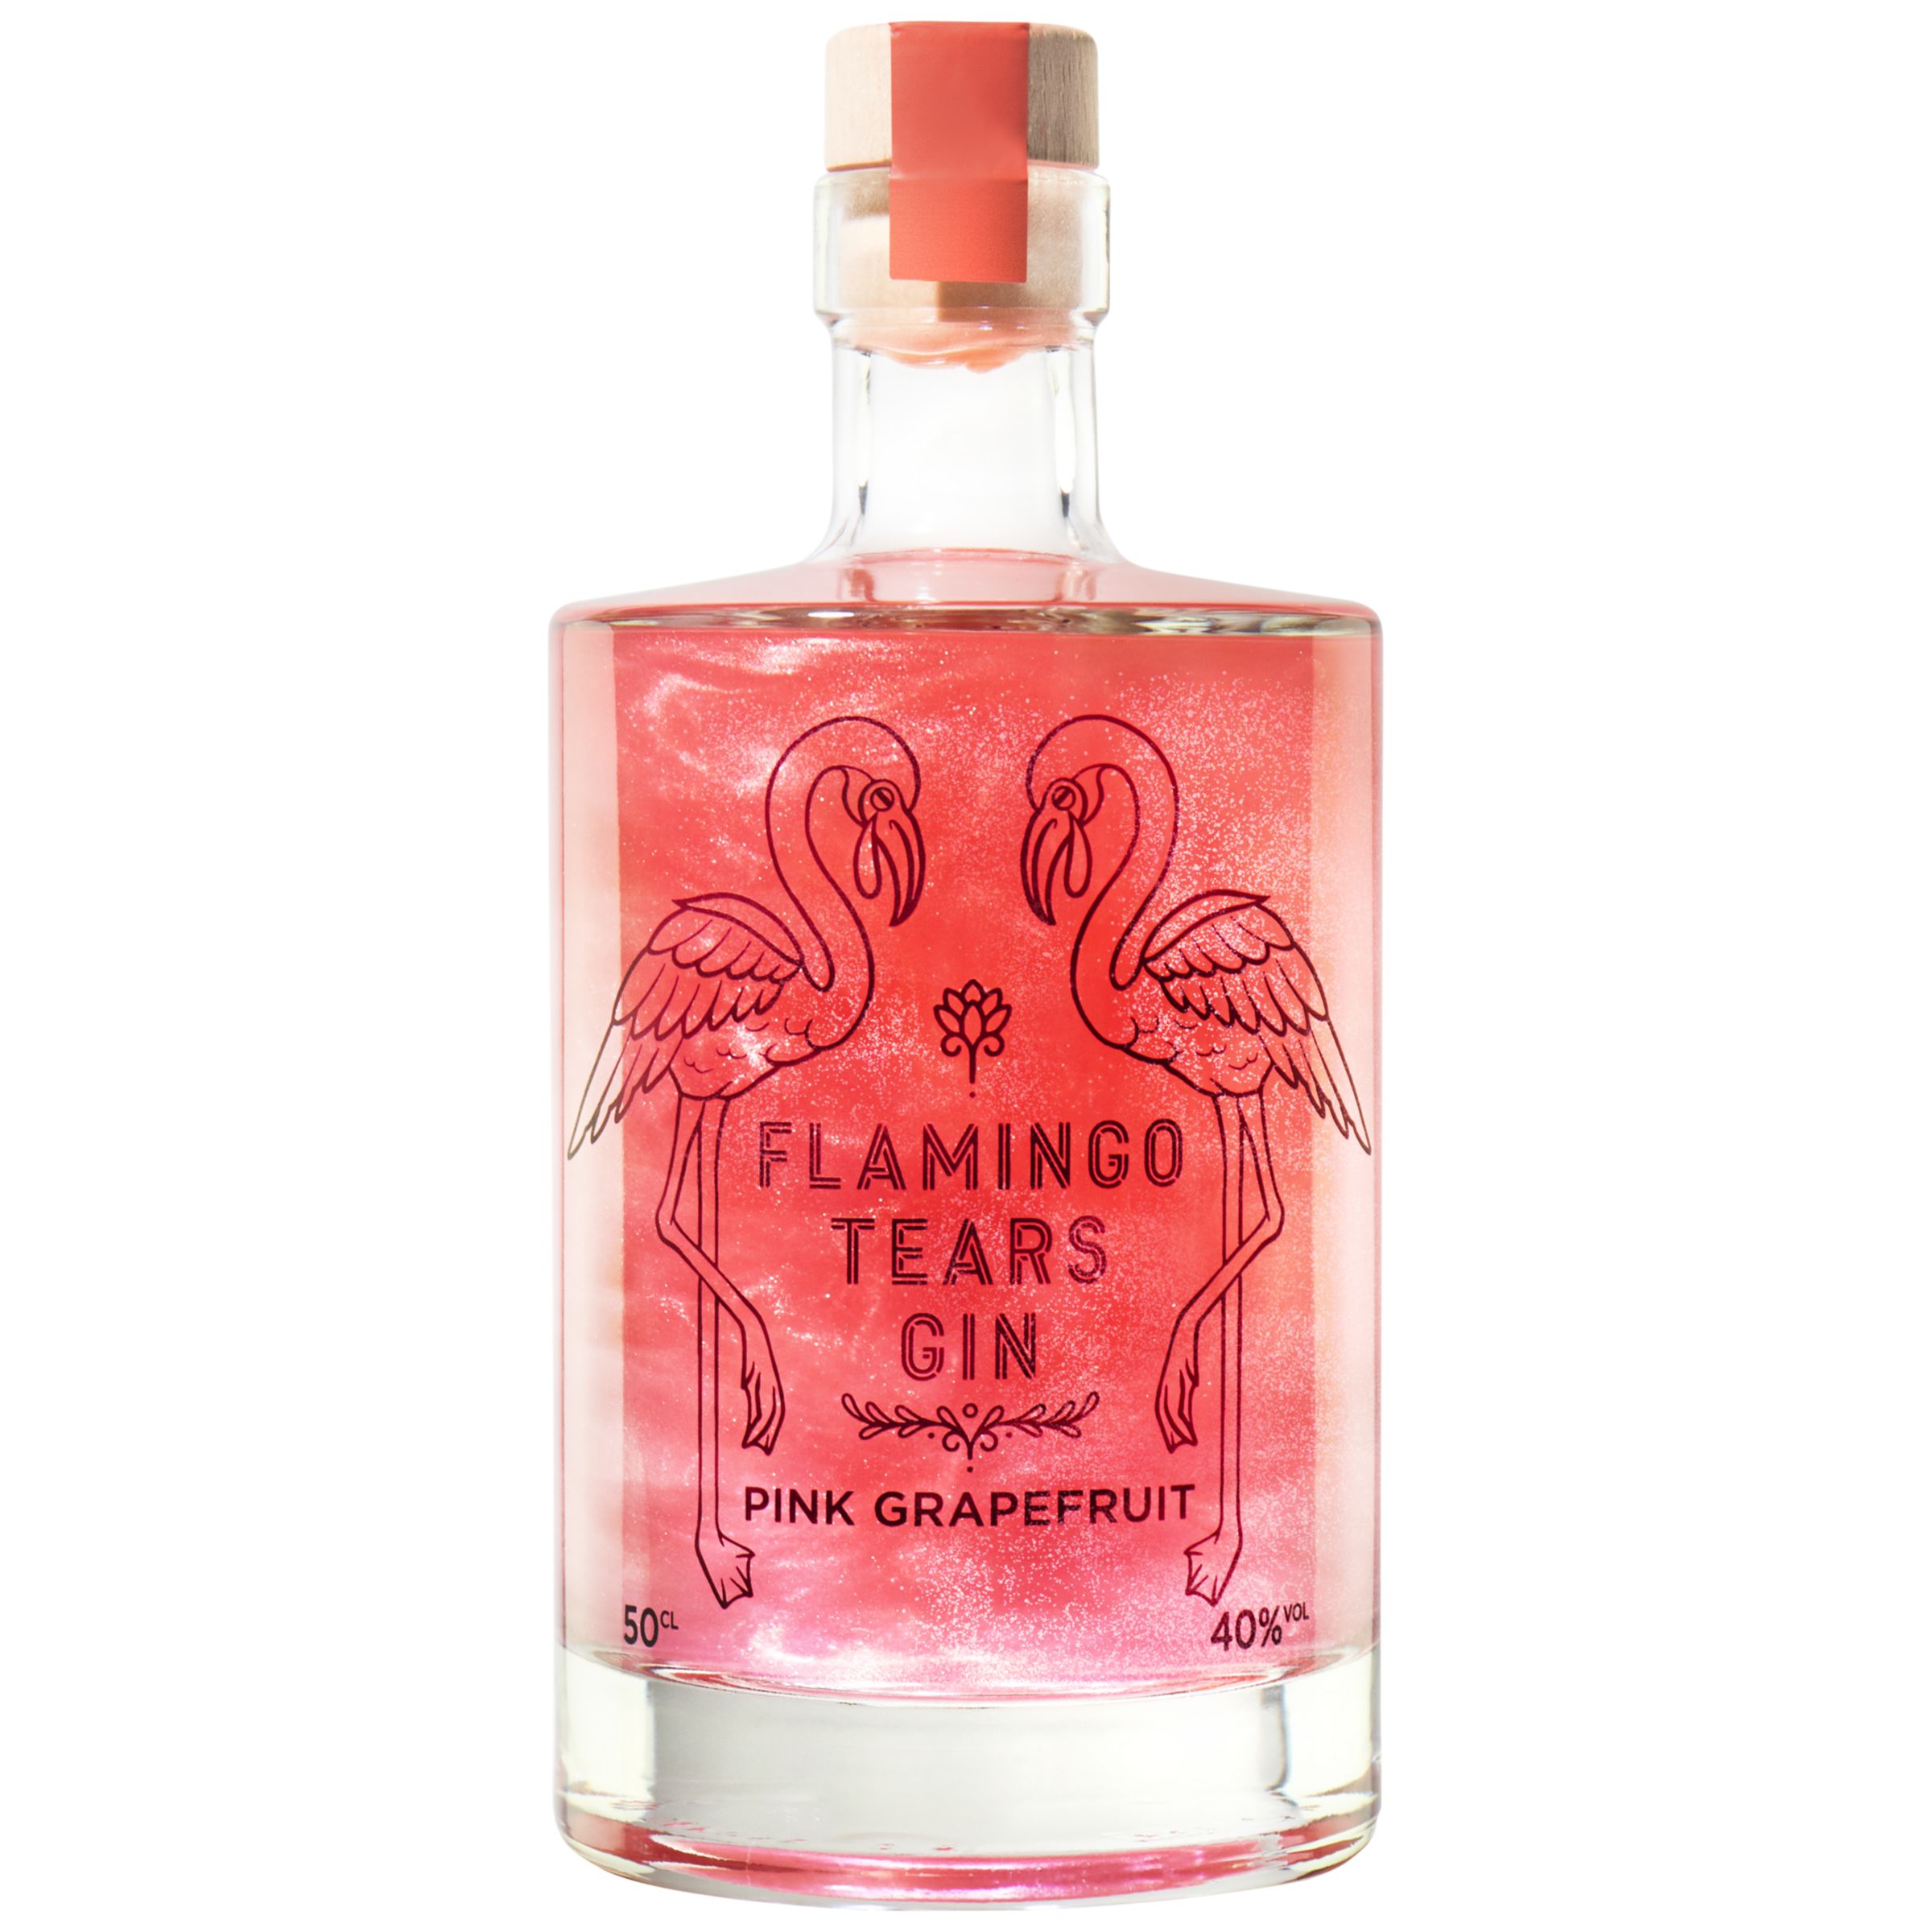 Firebox Flamingo Gin, Grapefruit Pink Tears 50cl